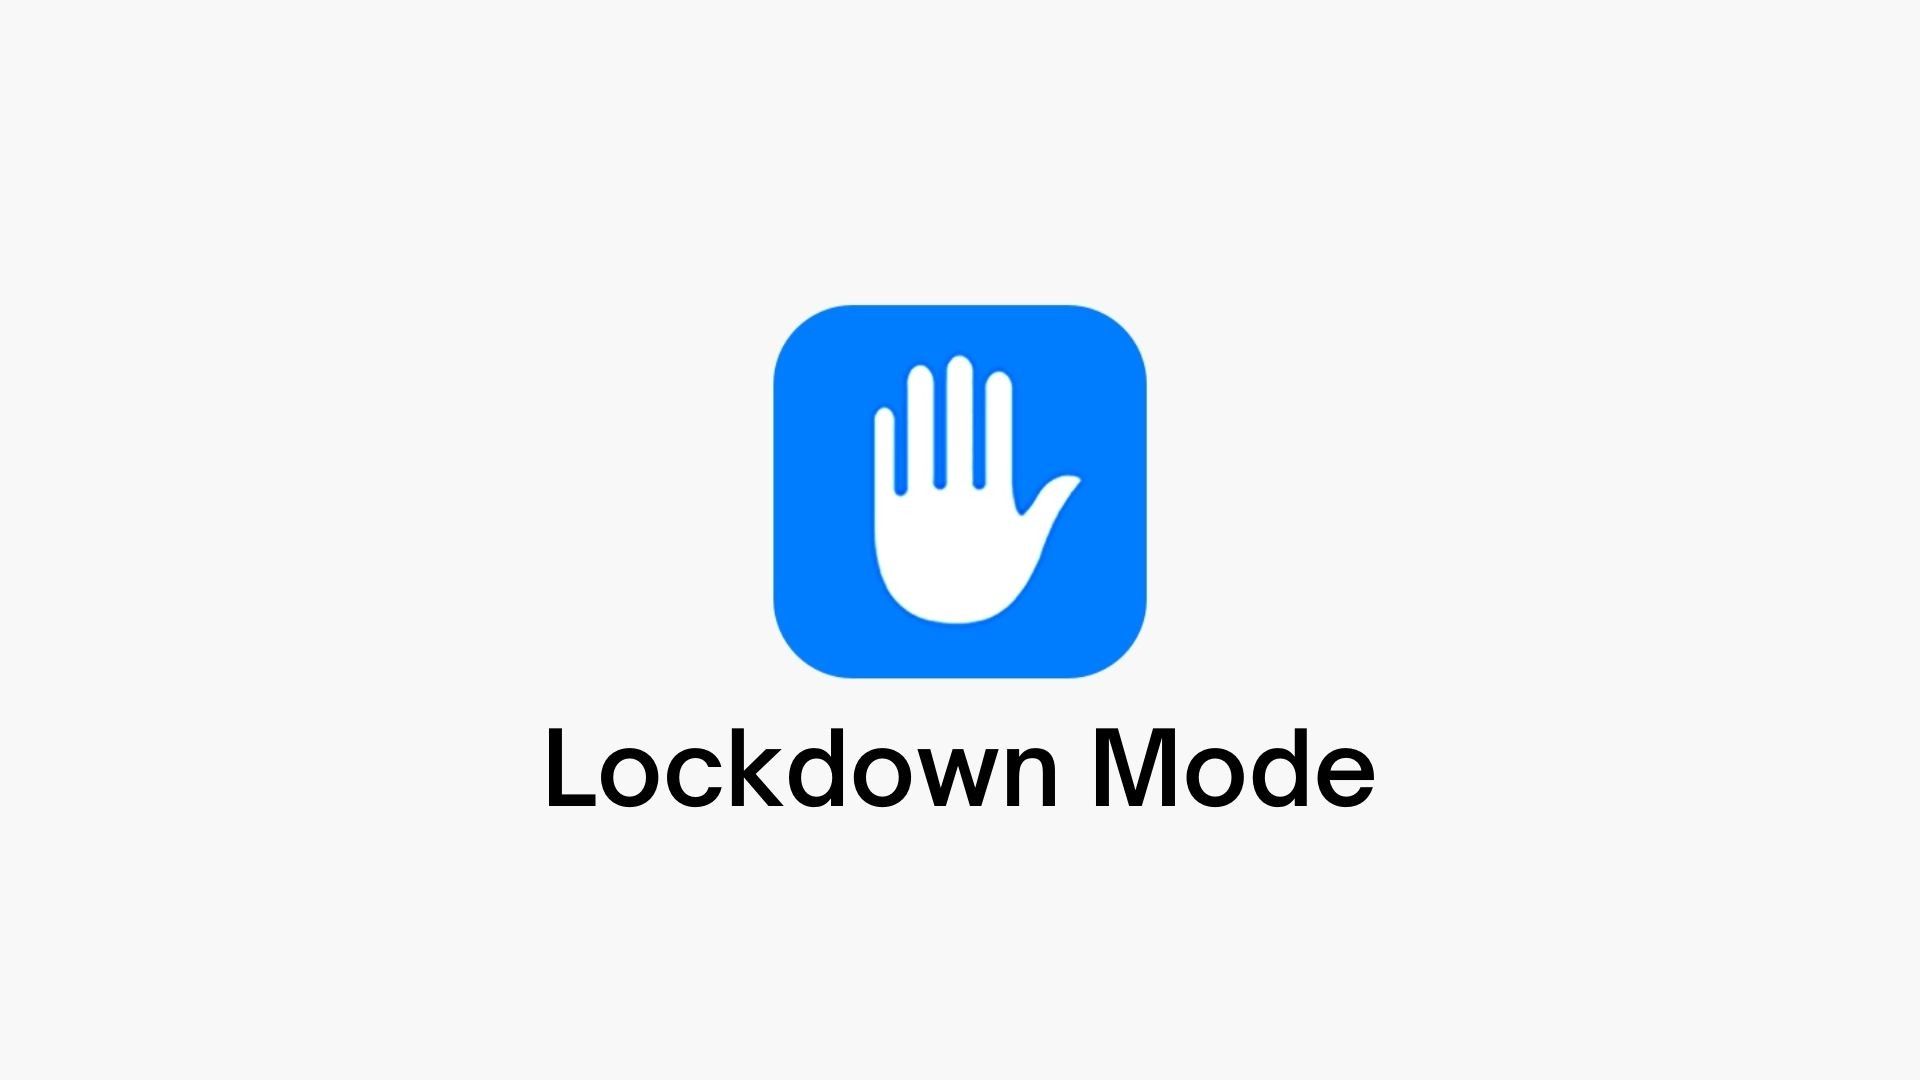 Lockdown Mode on iOS 16, iPadOS 16, and macOS Ventura